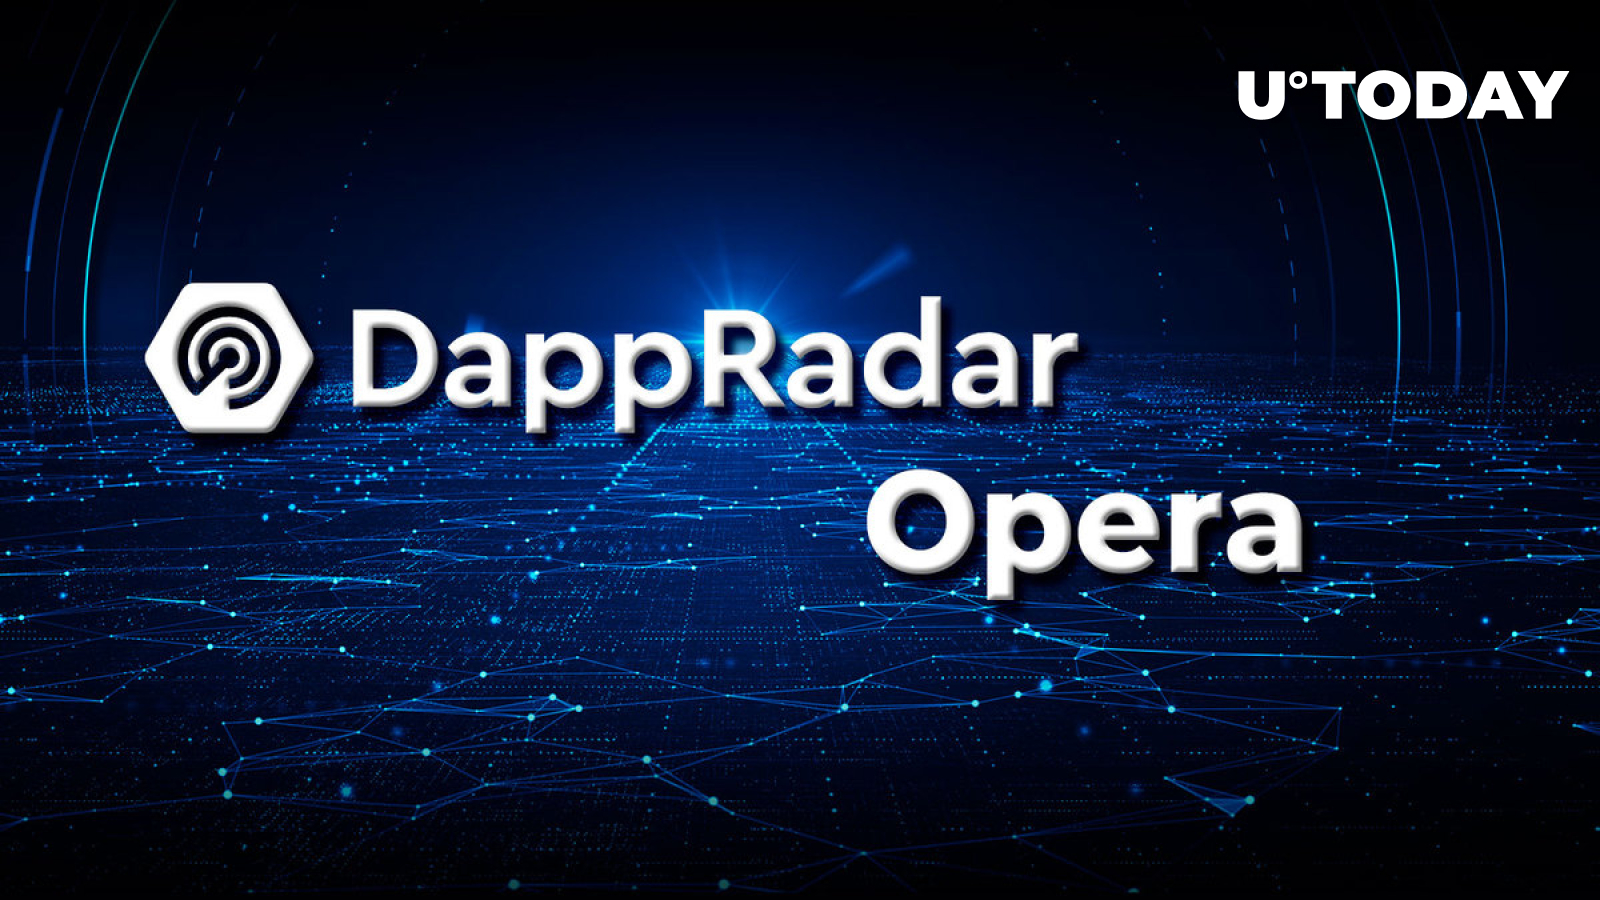 Opera Browser Partners with DappRadar (RADAR) Crypto Analytical Platform